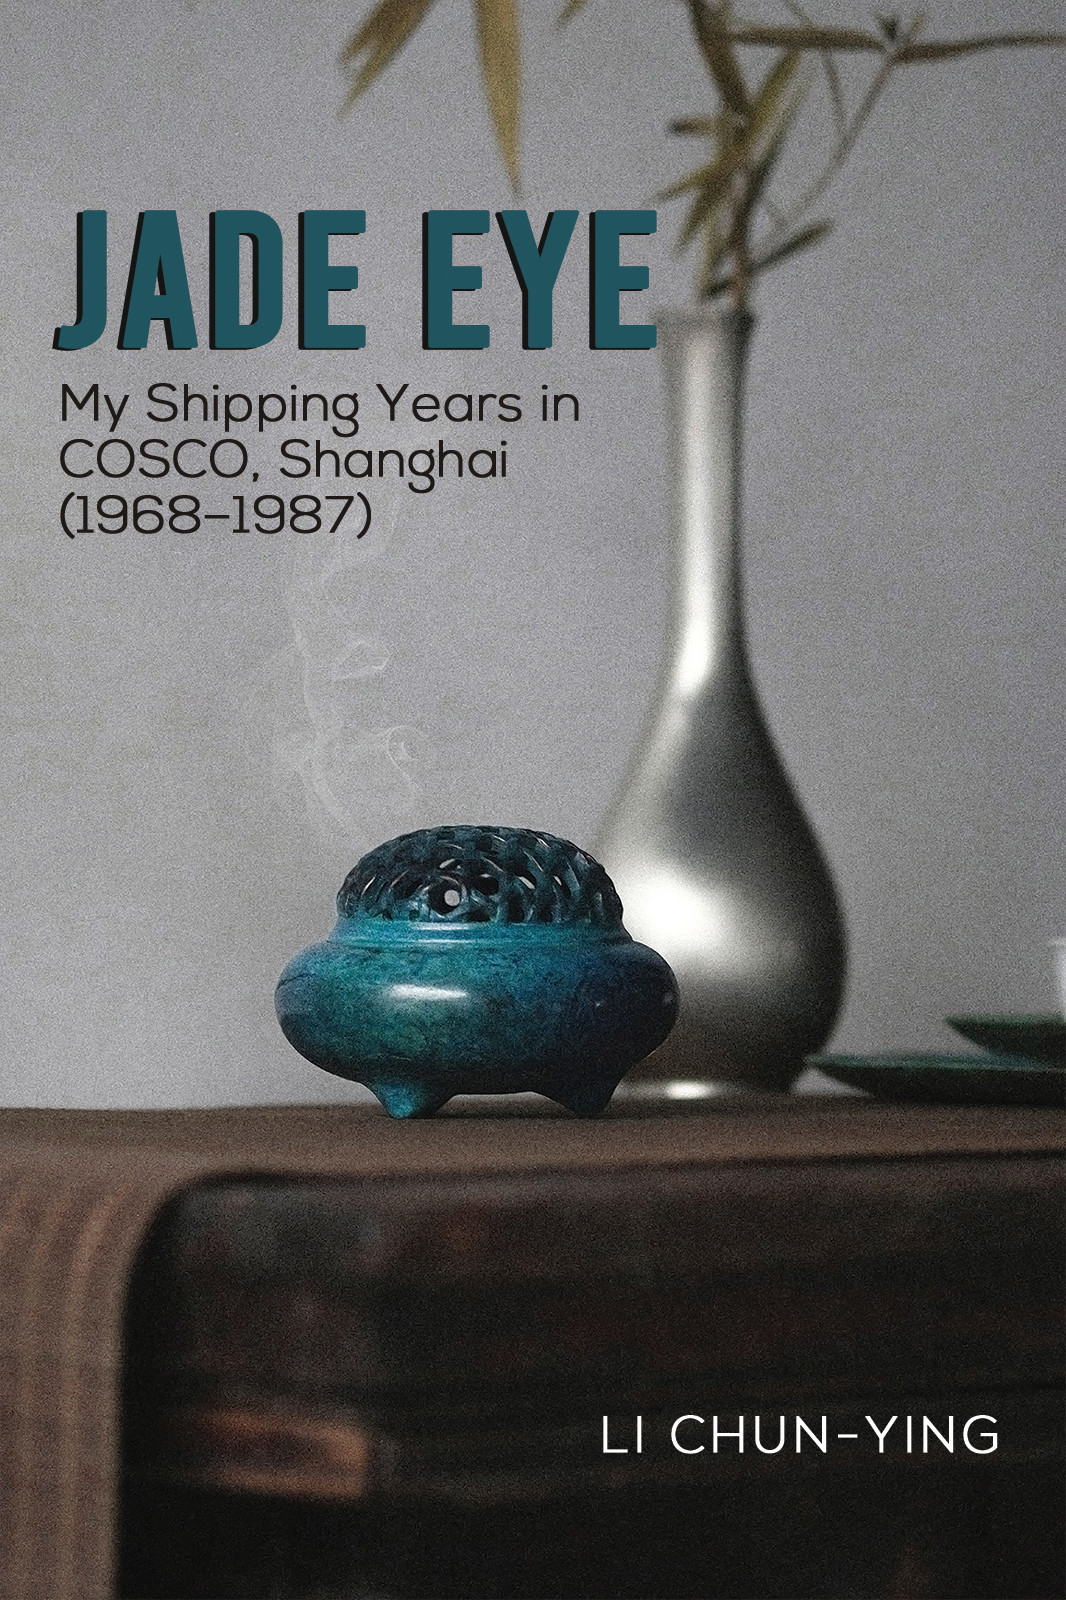 Jade Eye